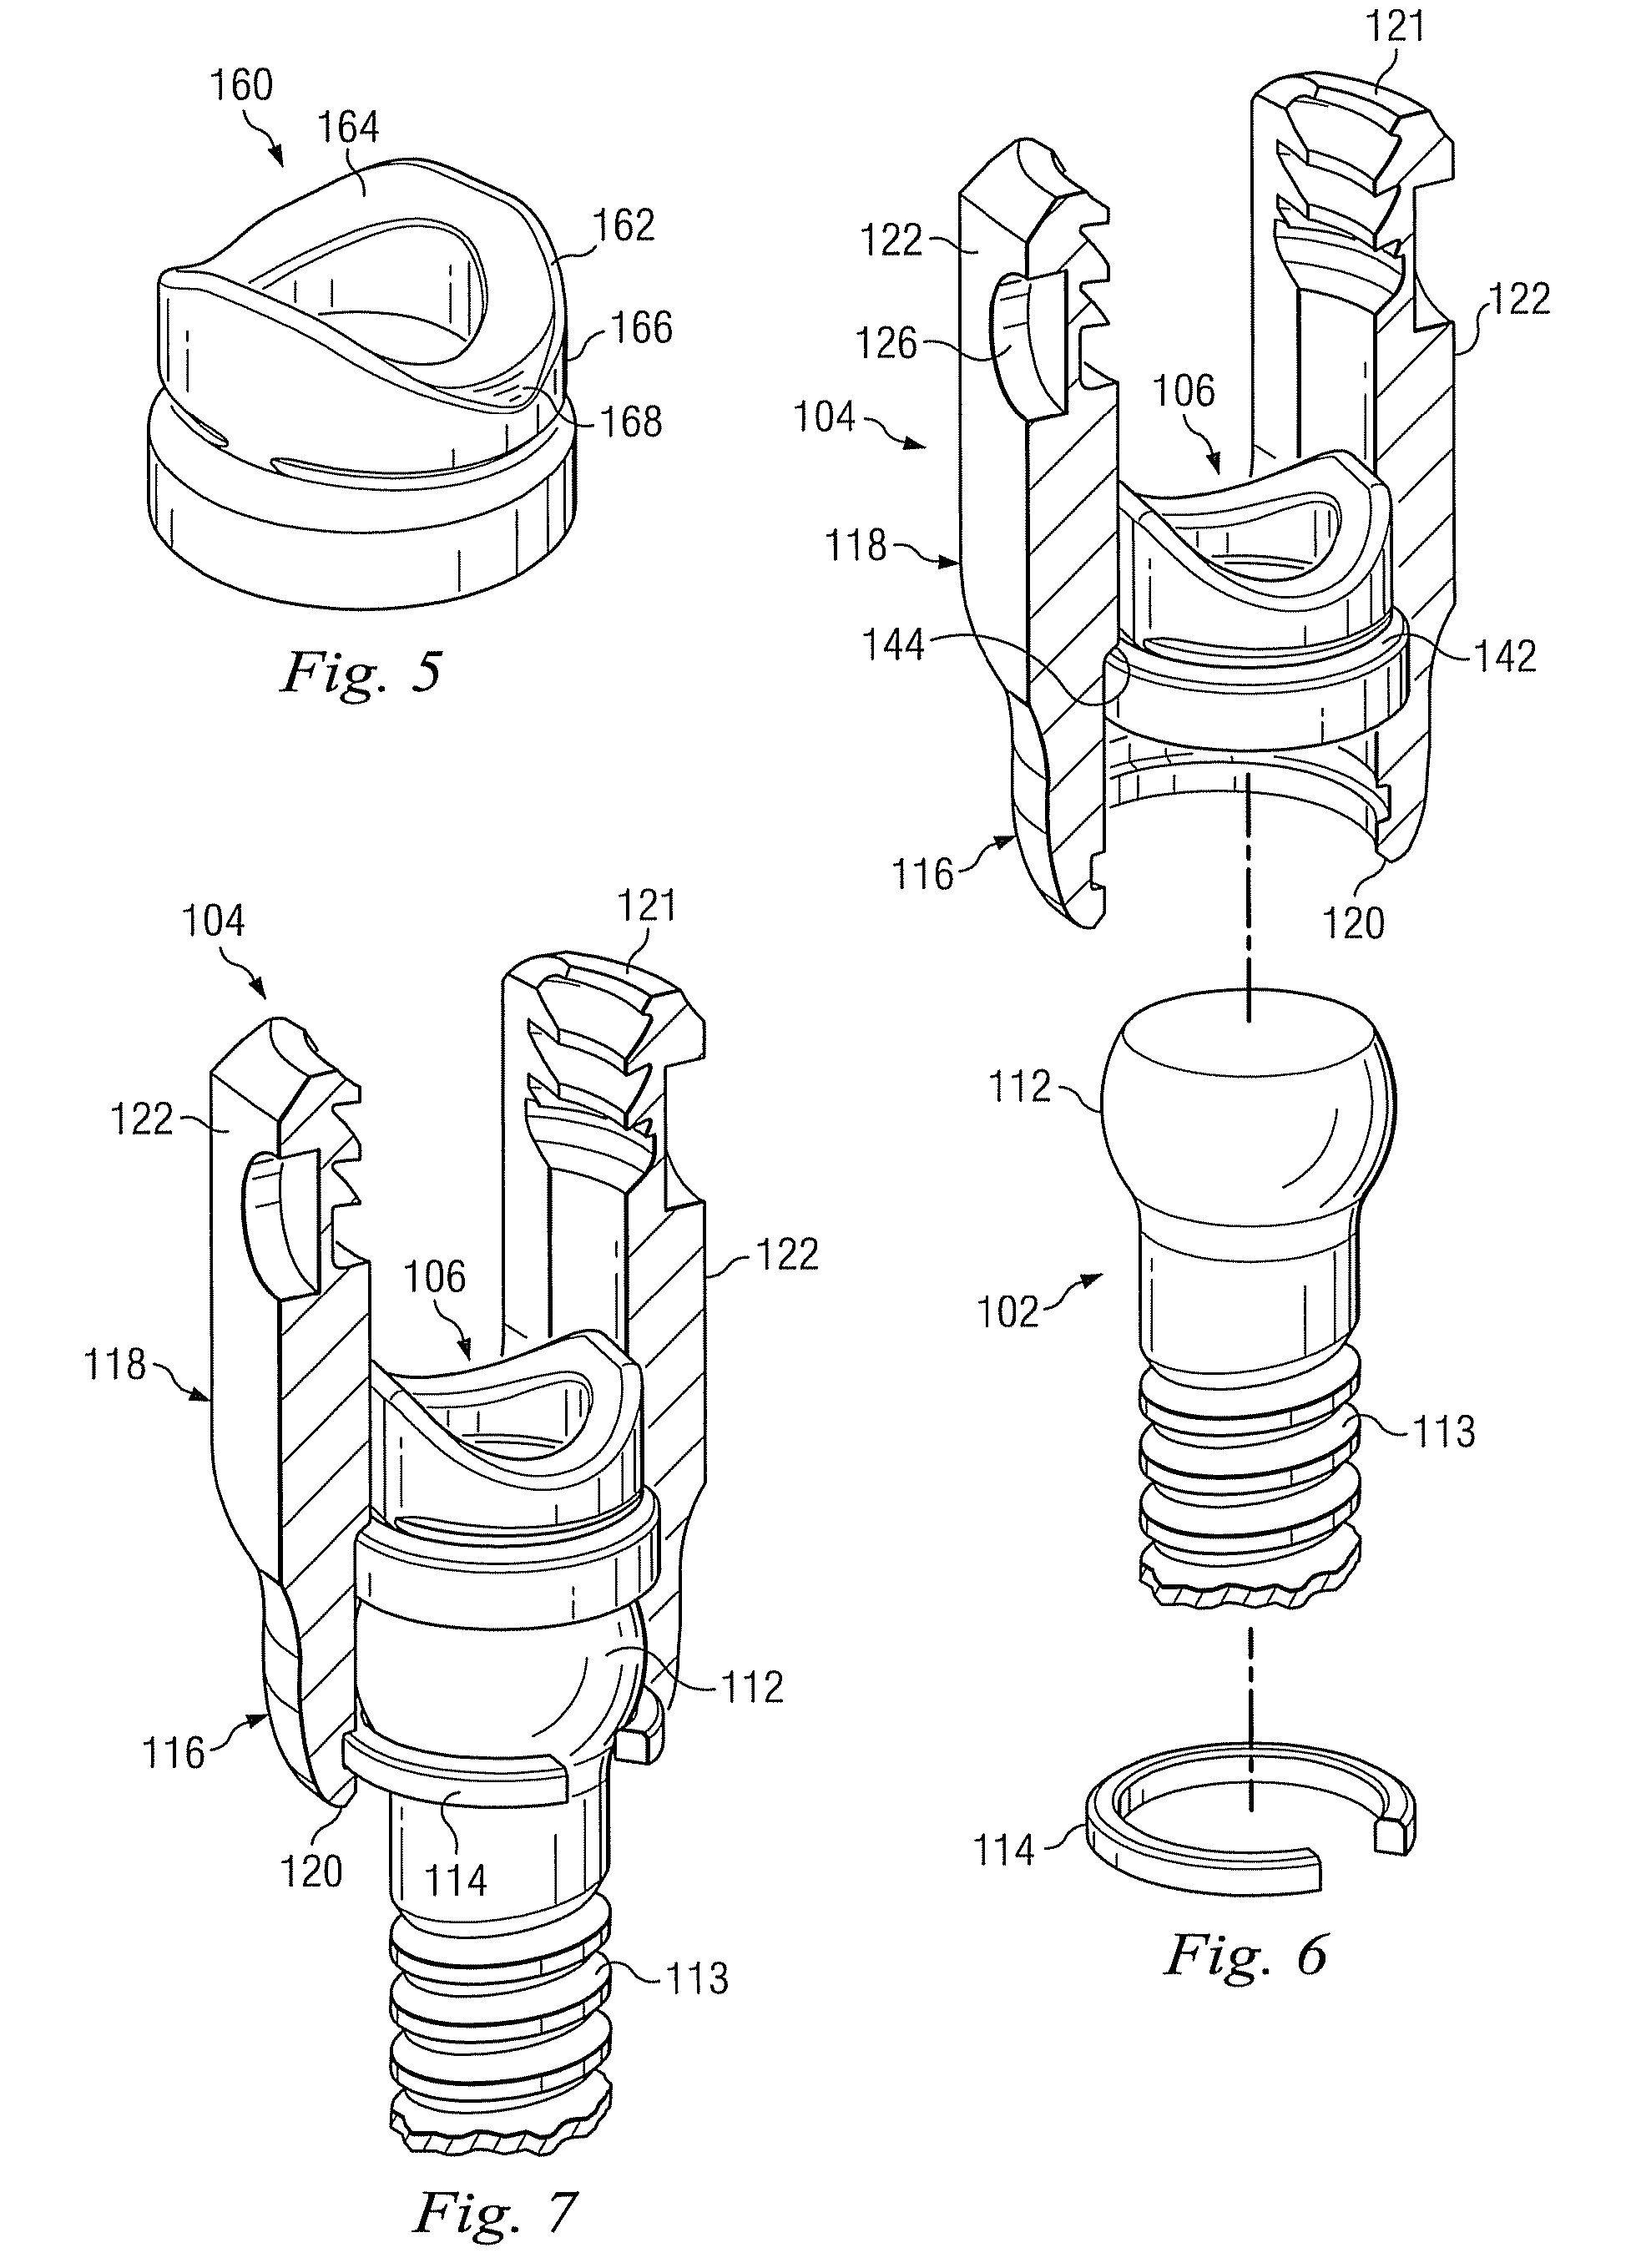 Keyed crown orientation for multi-axial screws